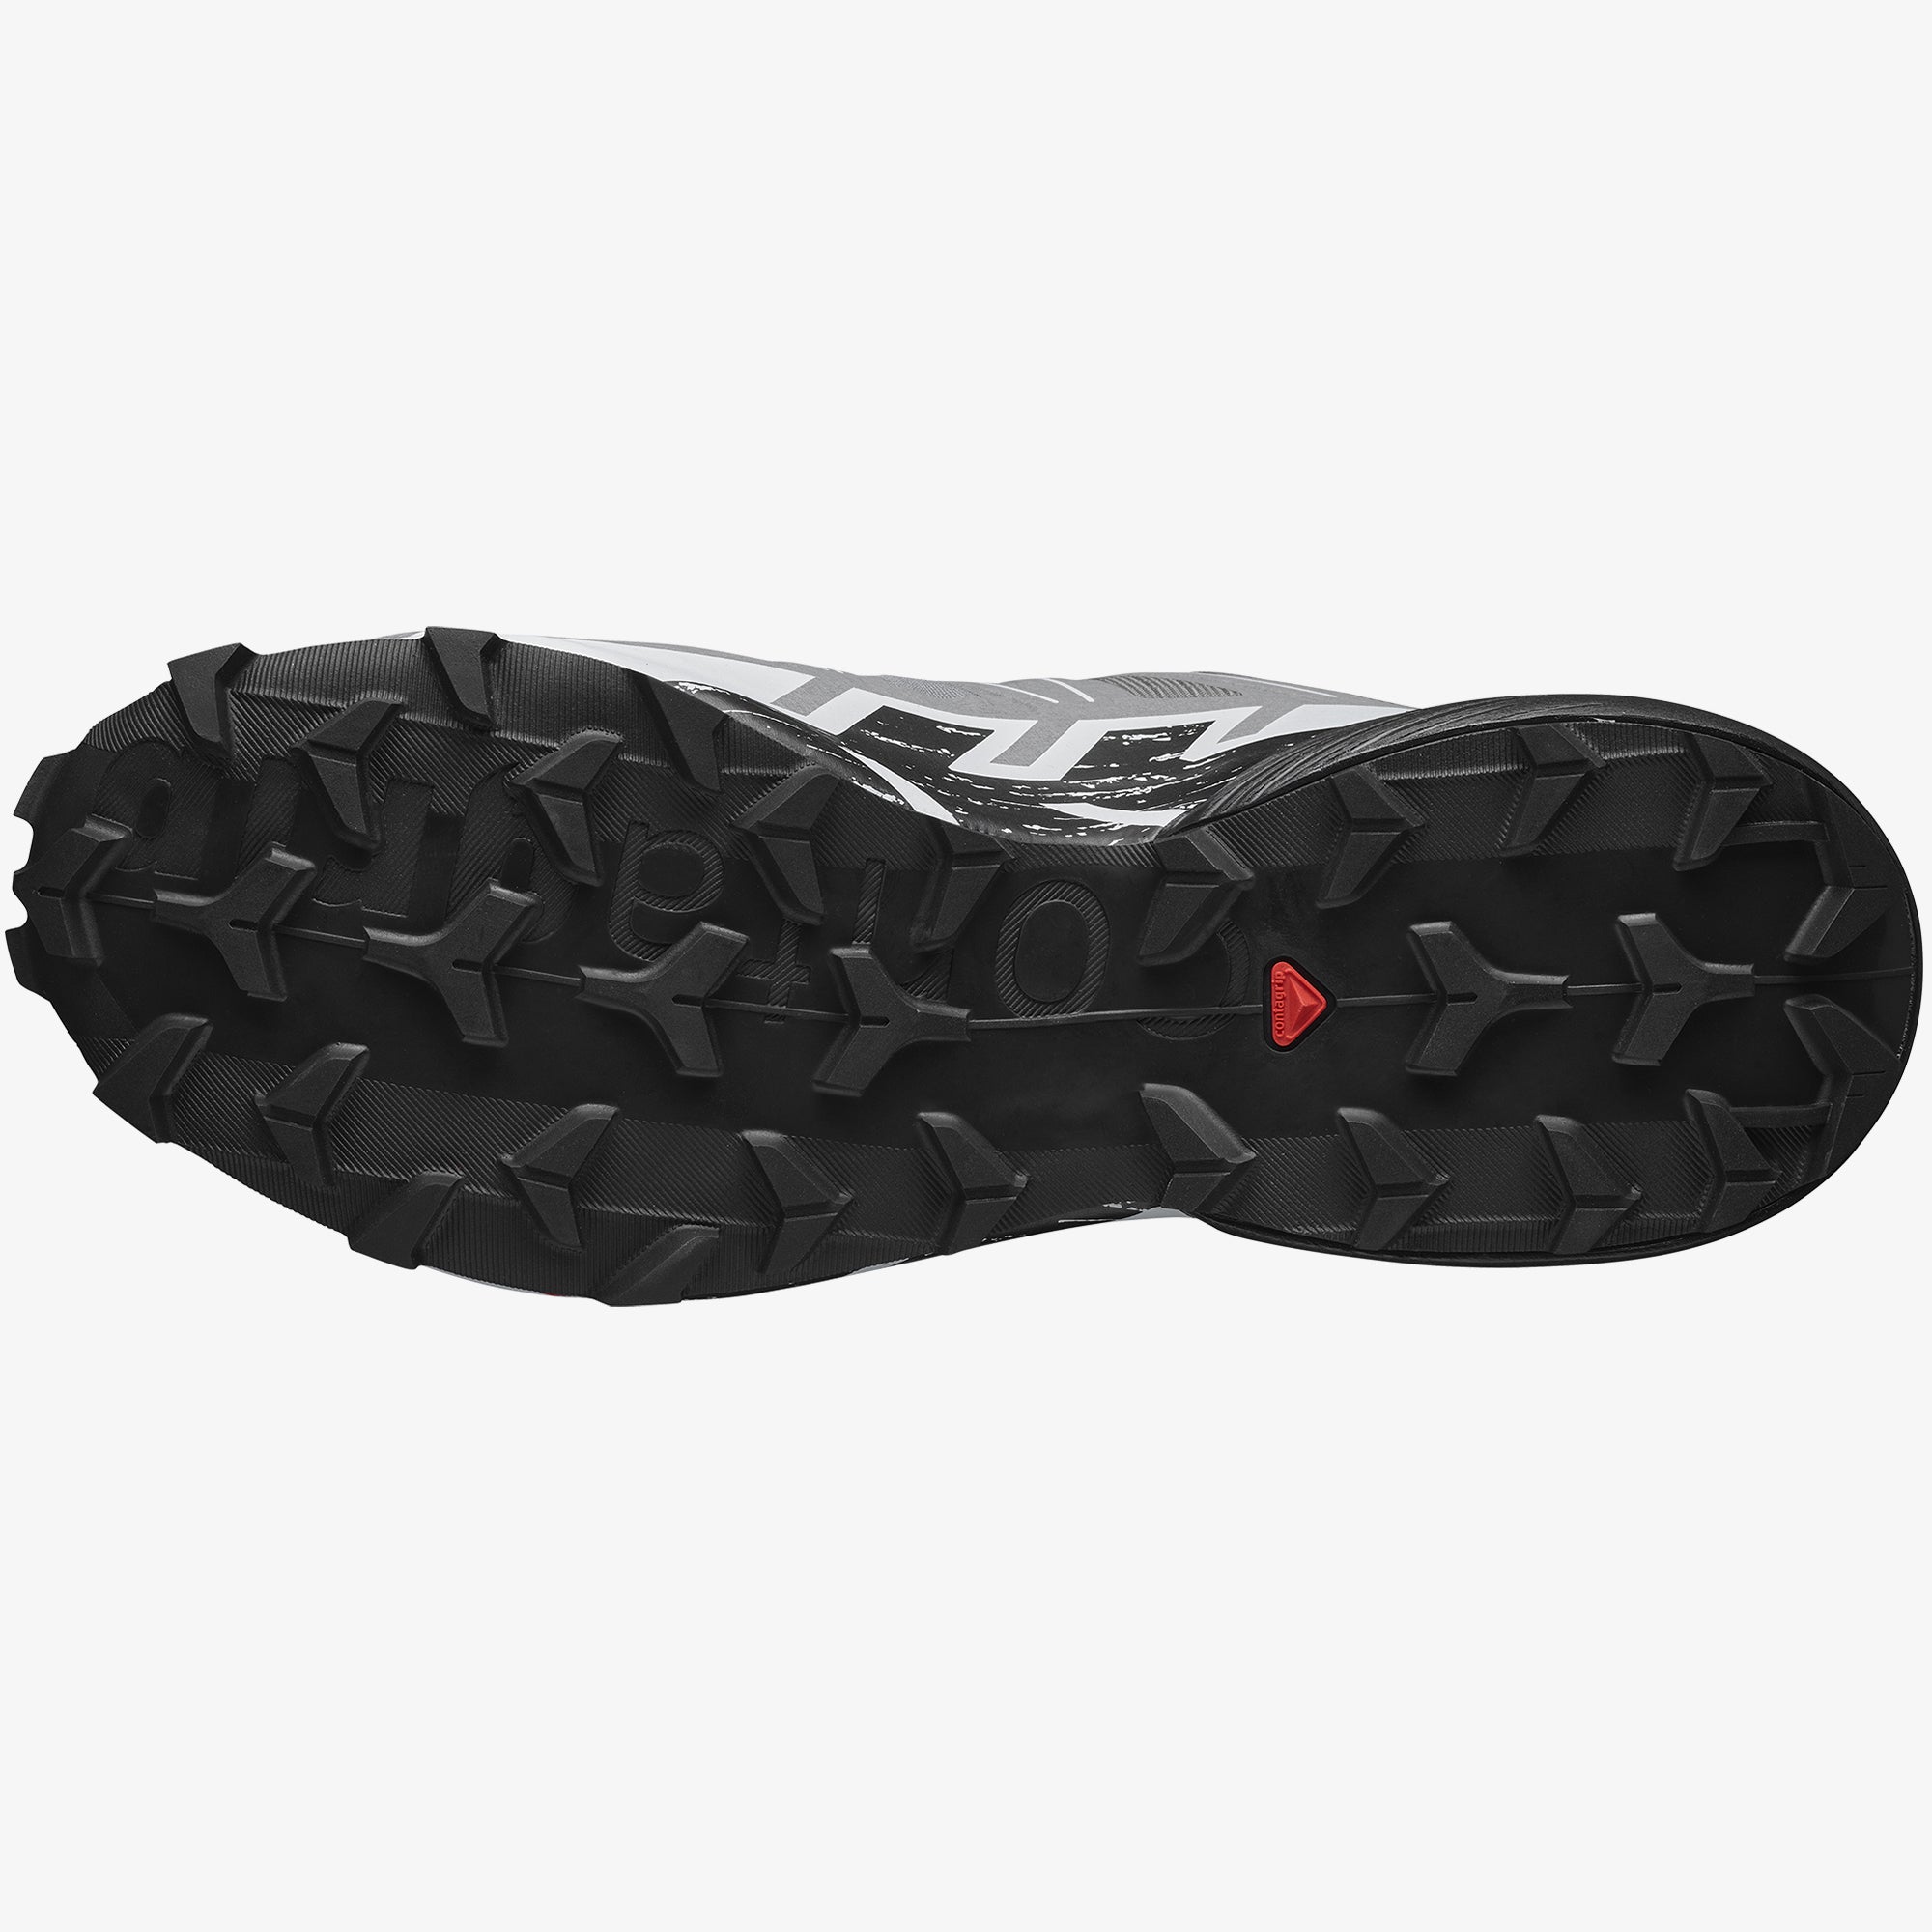 Review: Salomon Speedcross 6 - A trail shoe you can trust! - Inspiration